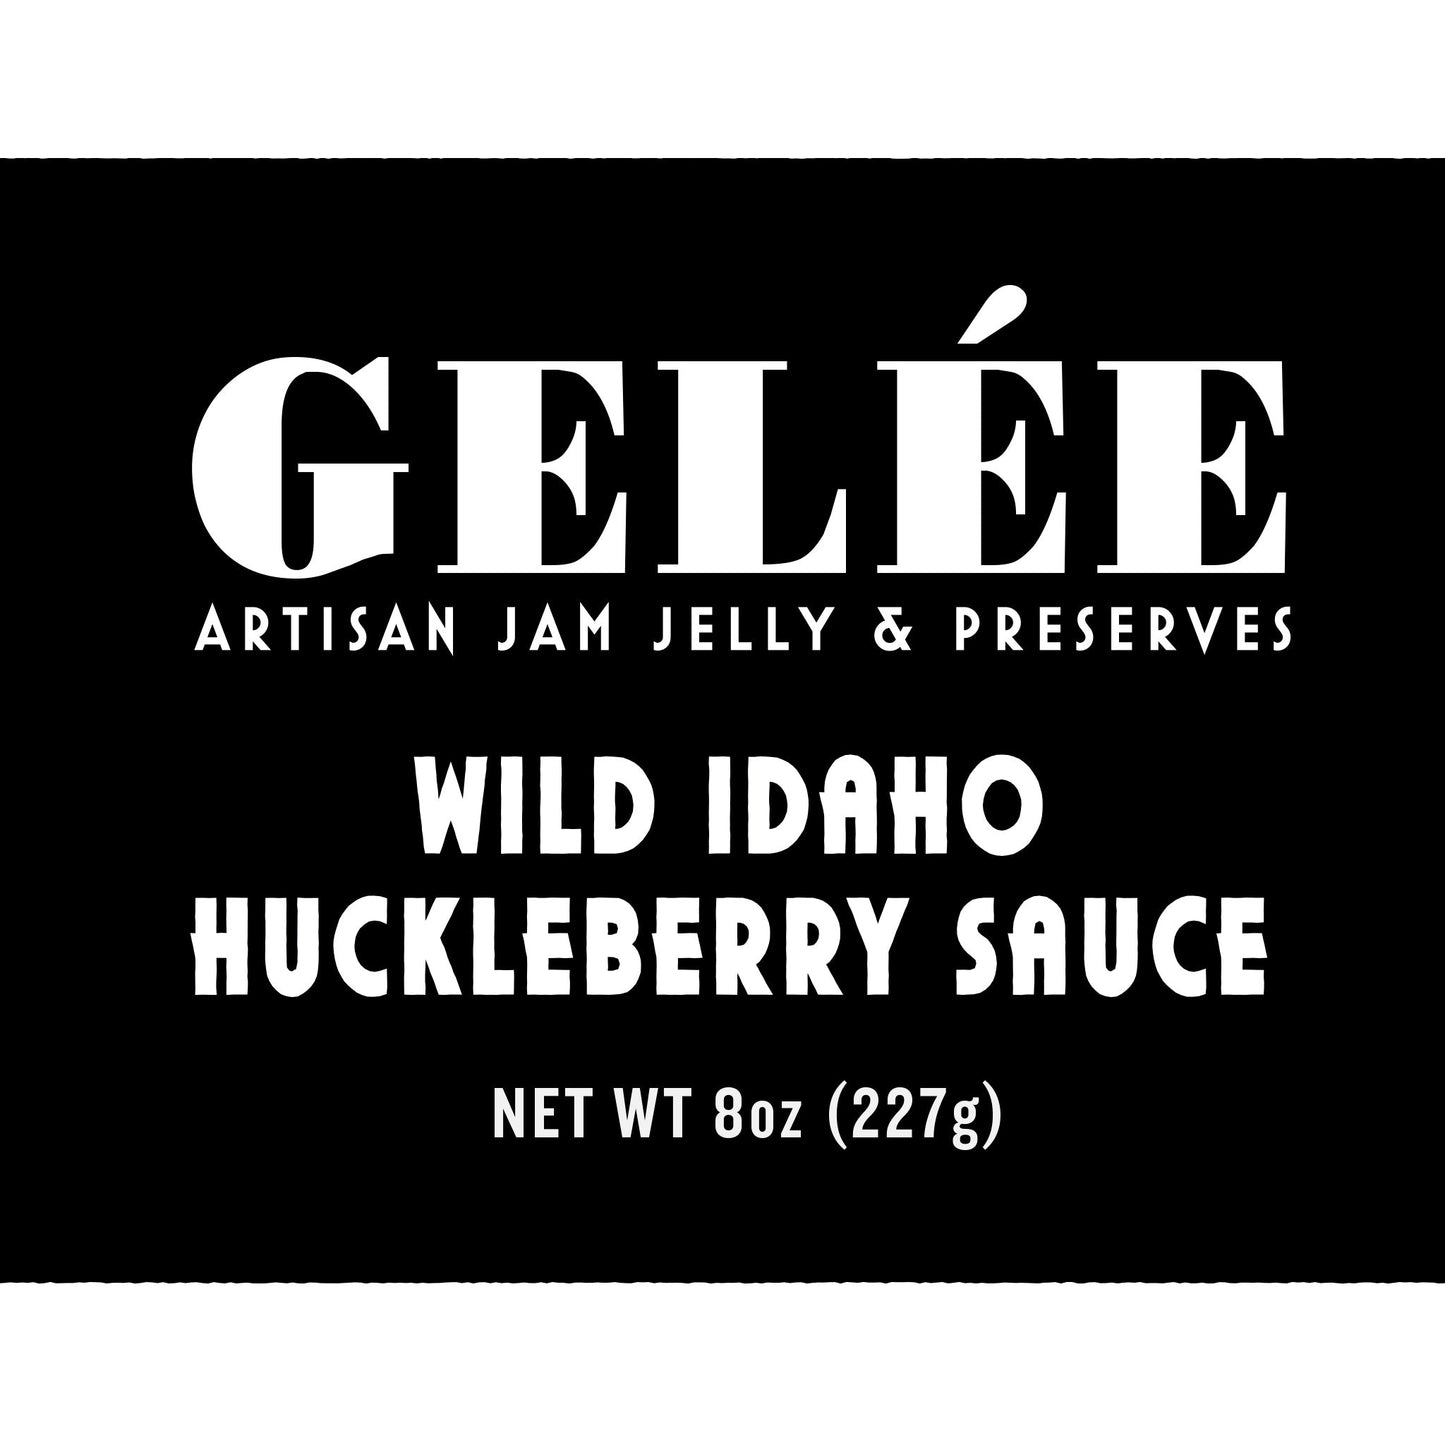 Wild Idaho Huckleberry Sauce